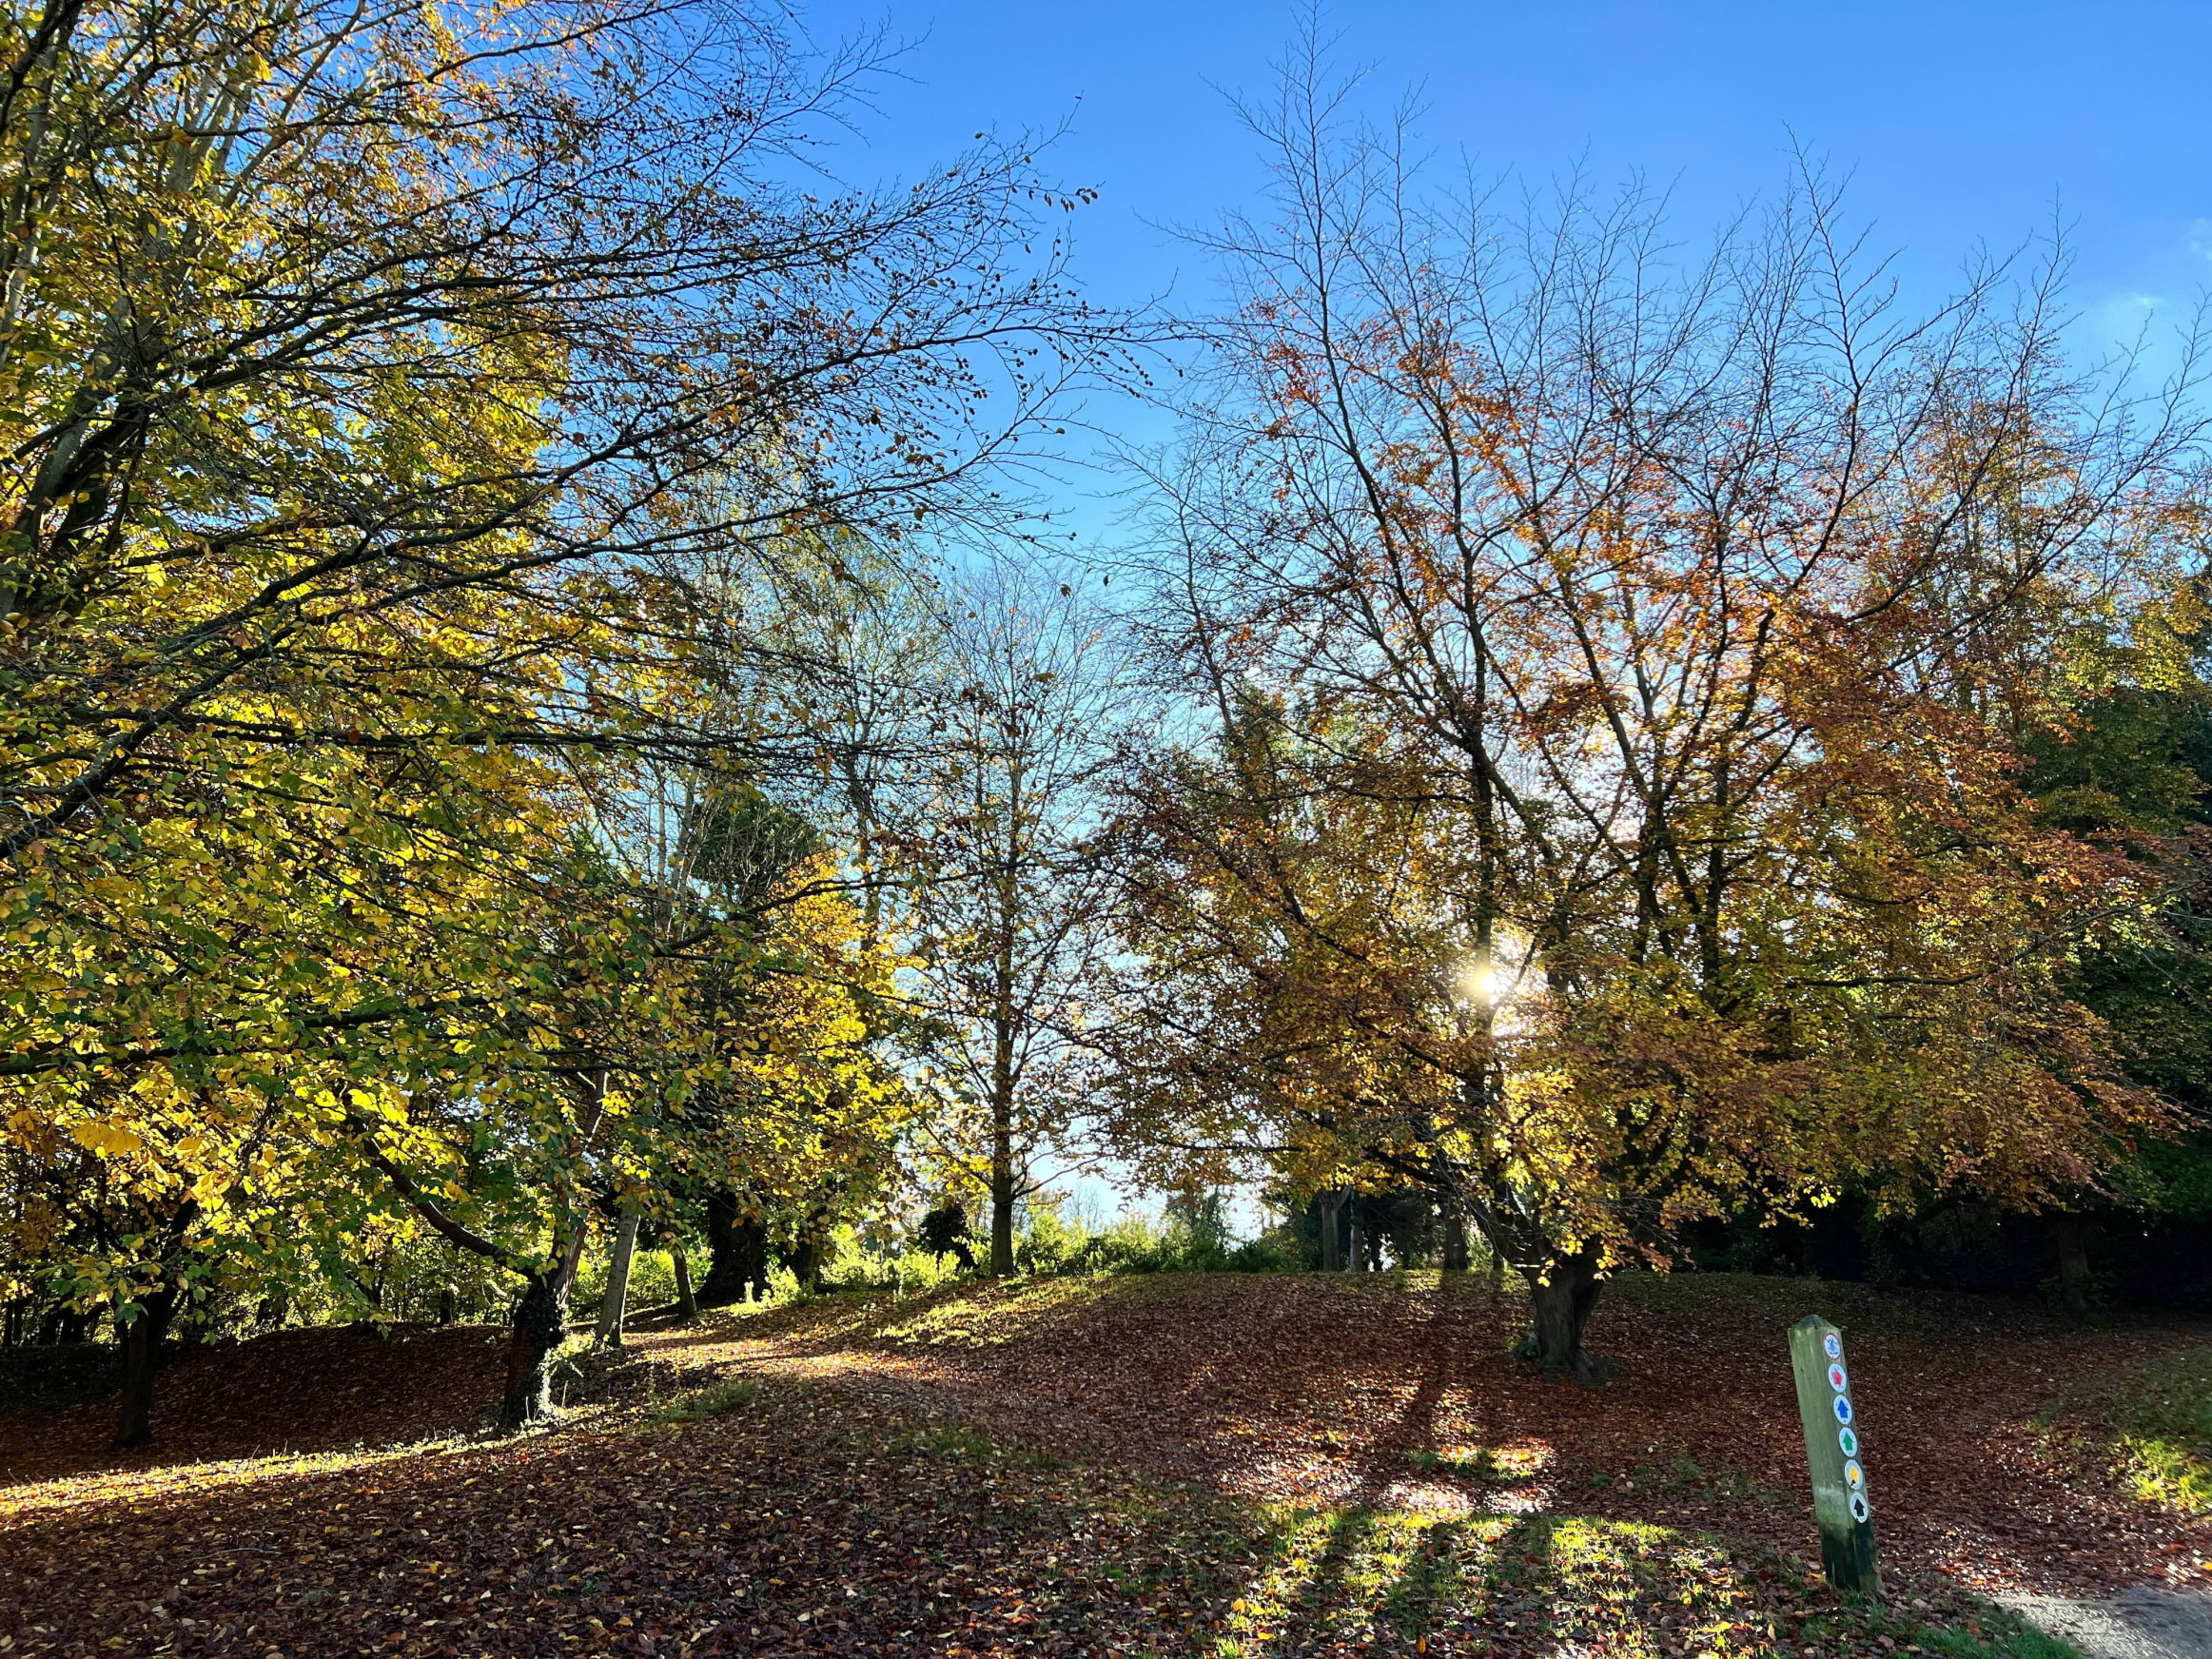 Autumn trees in Whitworth Park